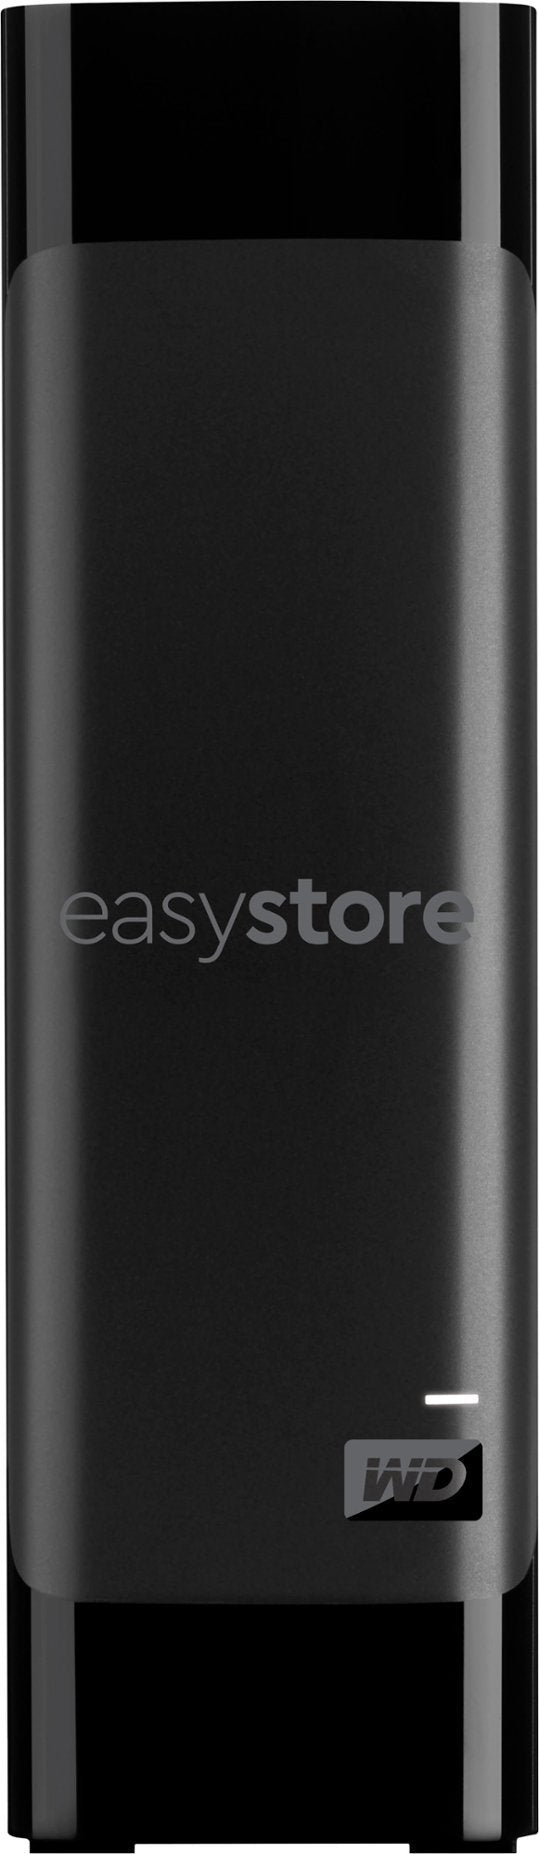 IN STOCK! WD Easystore 20TB External USB 3.0 Hard Drive (Black